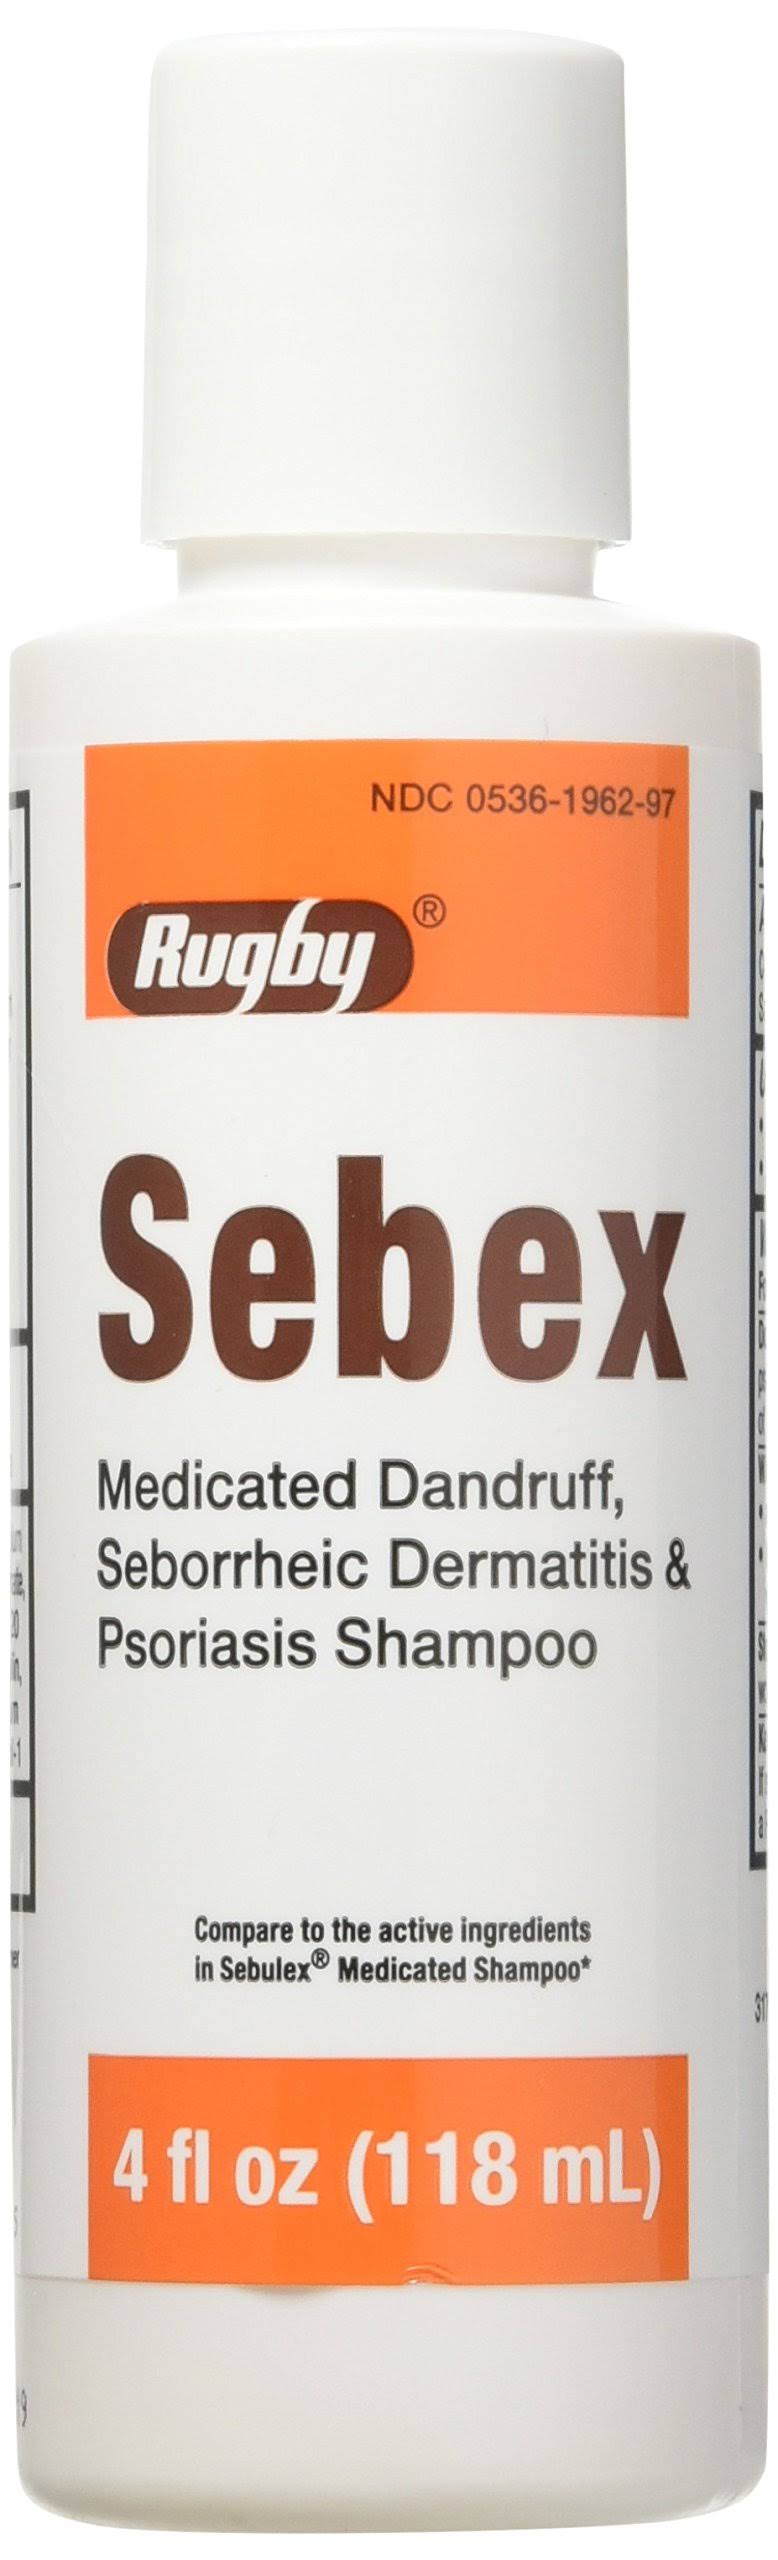 Rugby Sebex Liquid Medicated Dandruff Shampoo - 4oz